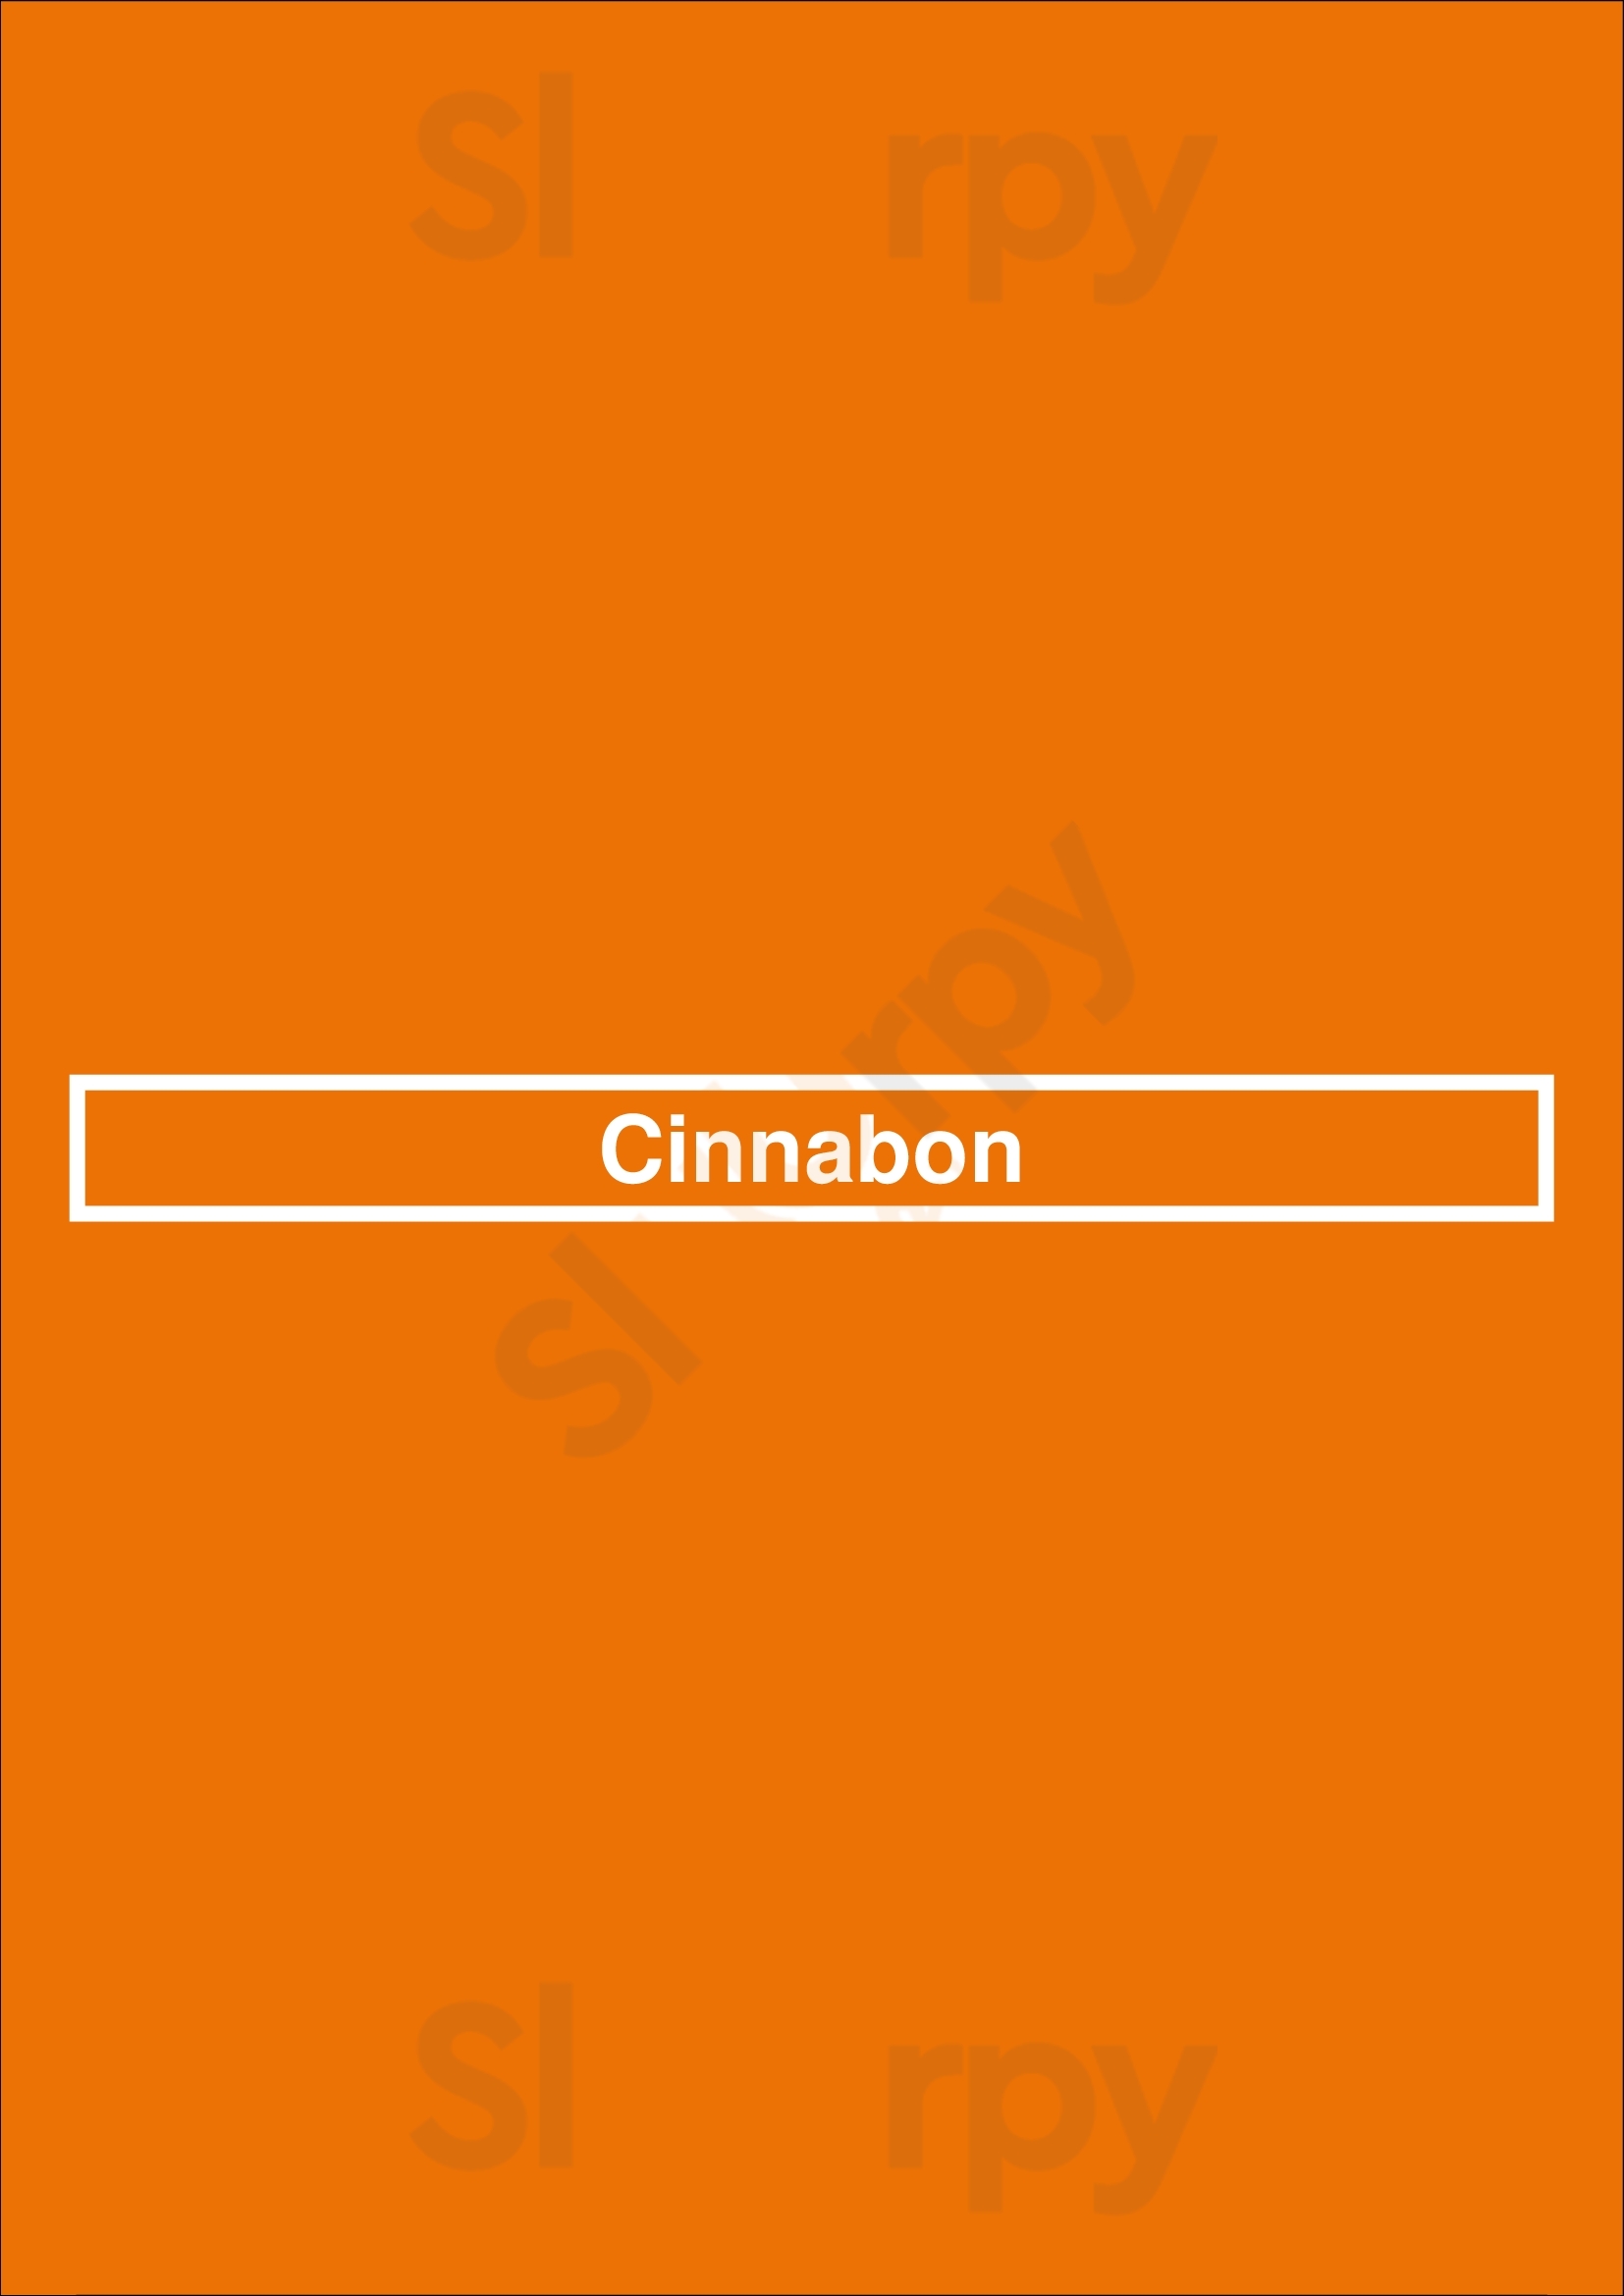 Cinnabon Torrance Menu - 1